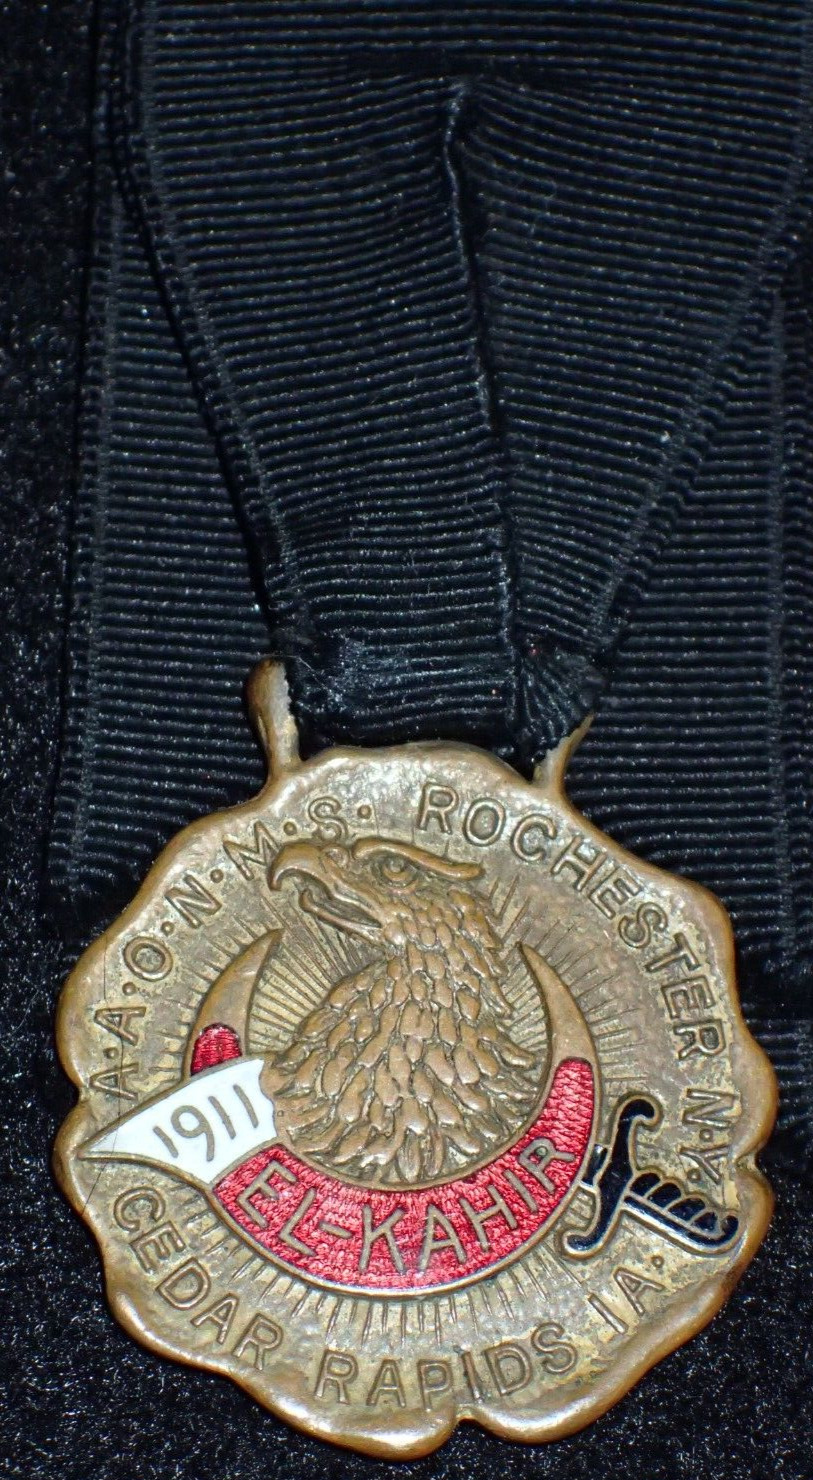 1911 AAONMS Shriners Rochester NY Cedar Rapids IA El Kahir Medal Fob, Robbins Co